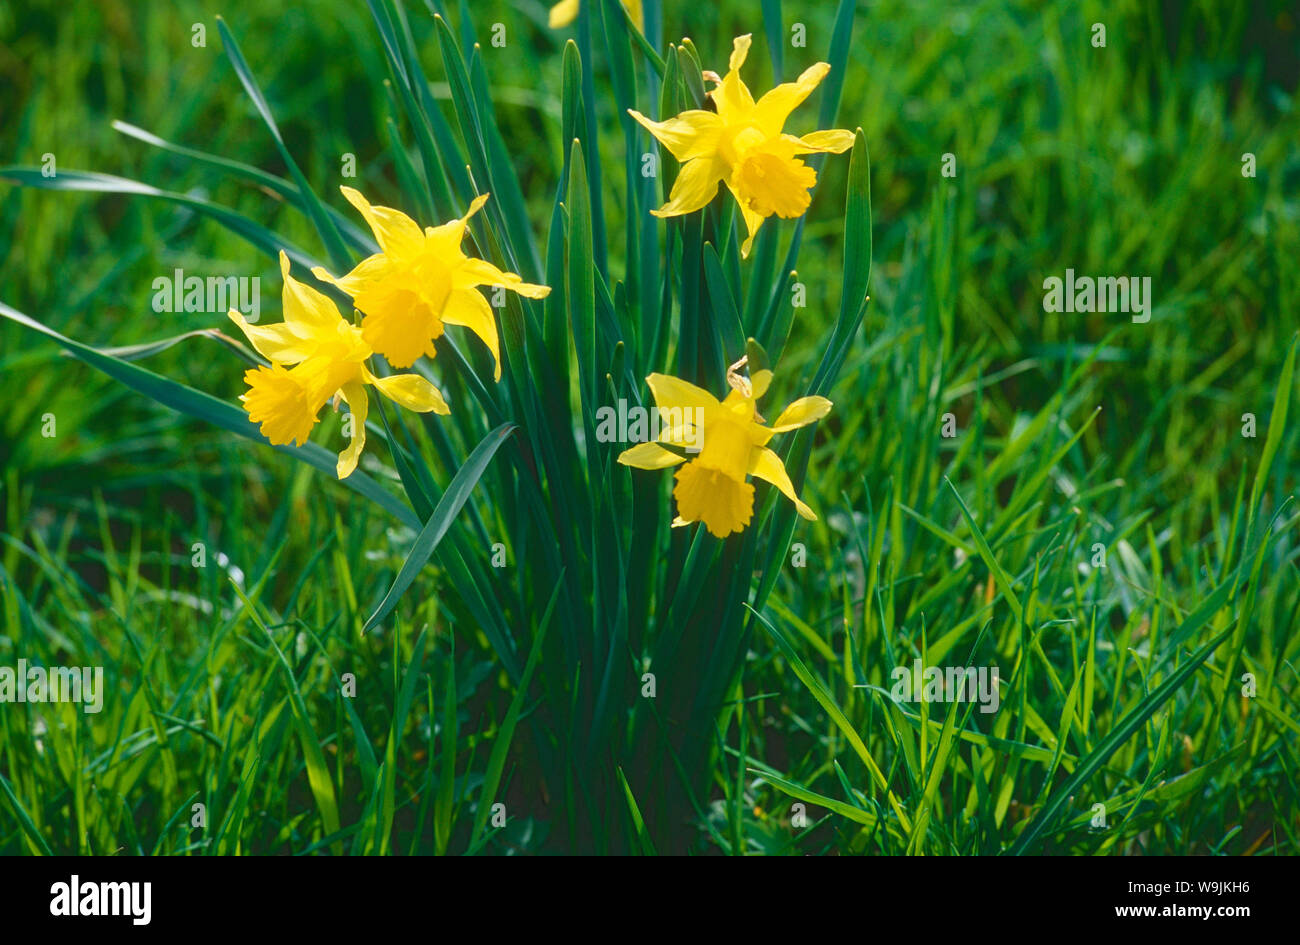 Osterglocke, Narcissus pseudonarcissus, Amarylidaceae, Blume, Blüten, blühend, Pflanze, Mont Crosin, St. Imier, Jura, Kanton Bern, 30071071 Stock Photo